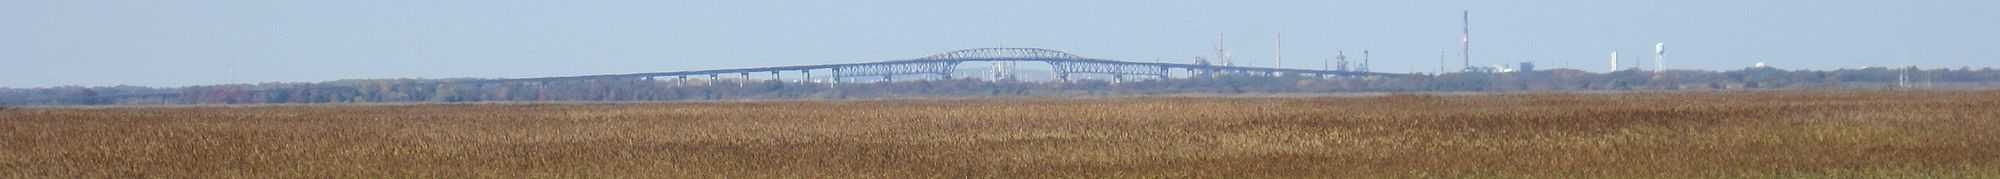 Panorama of a cantilever bridge